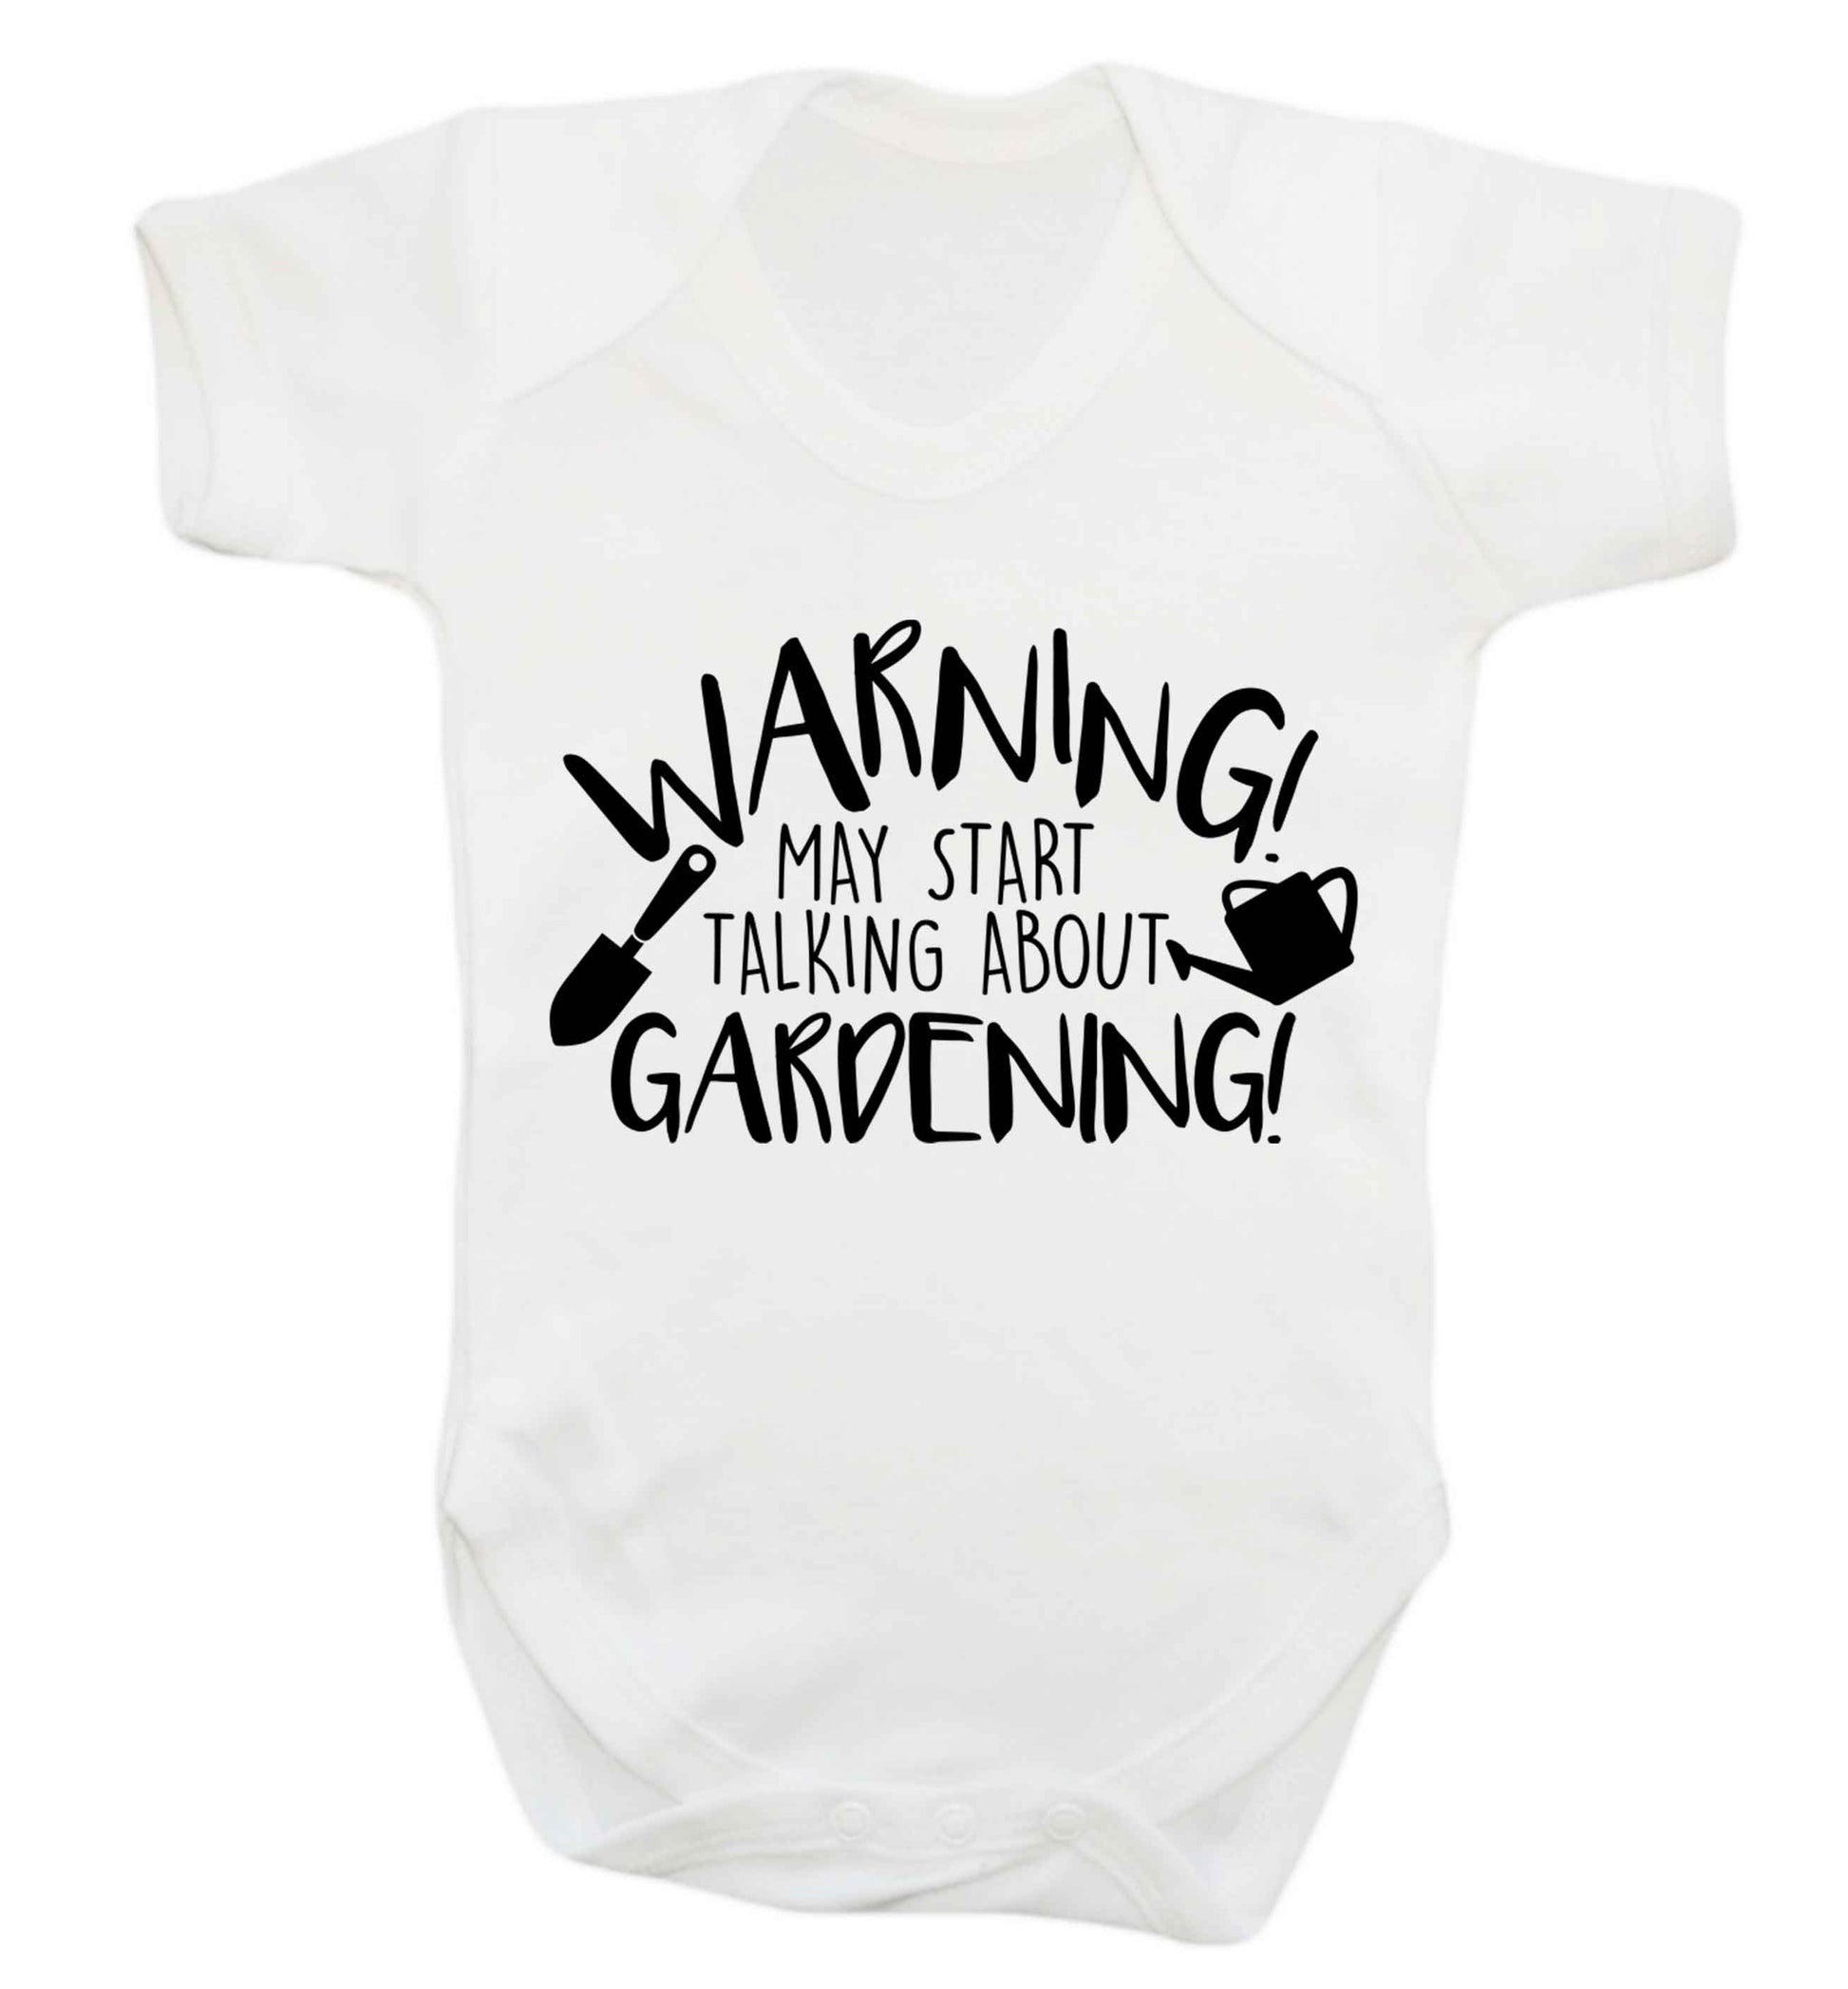 Warning may start talking about gardening Baby Vest white 18-24 months